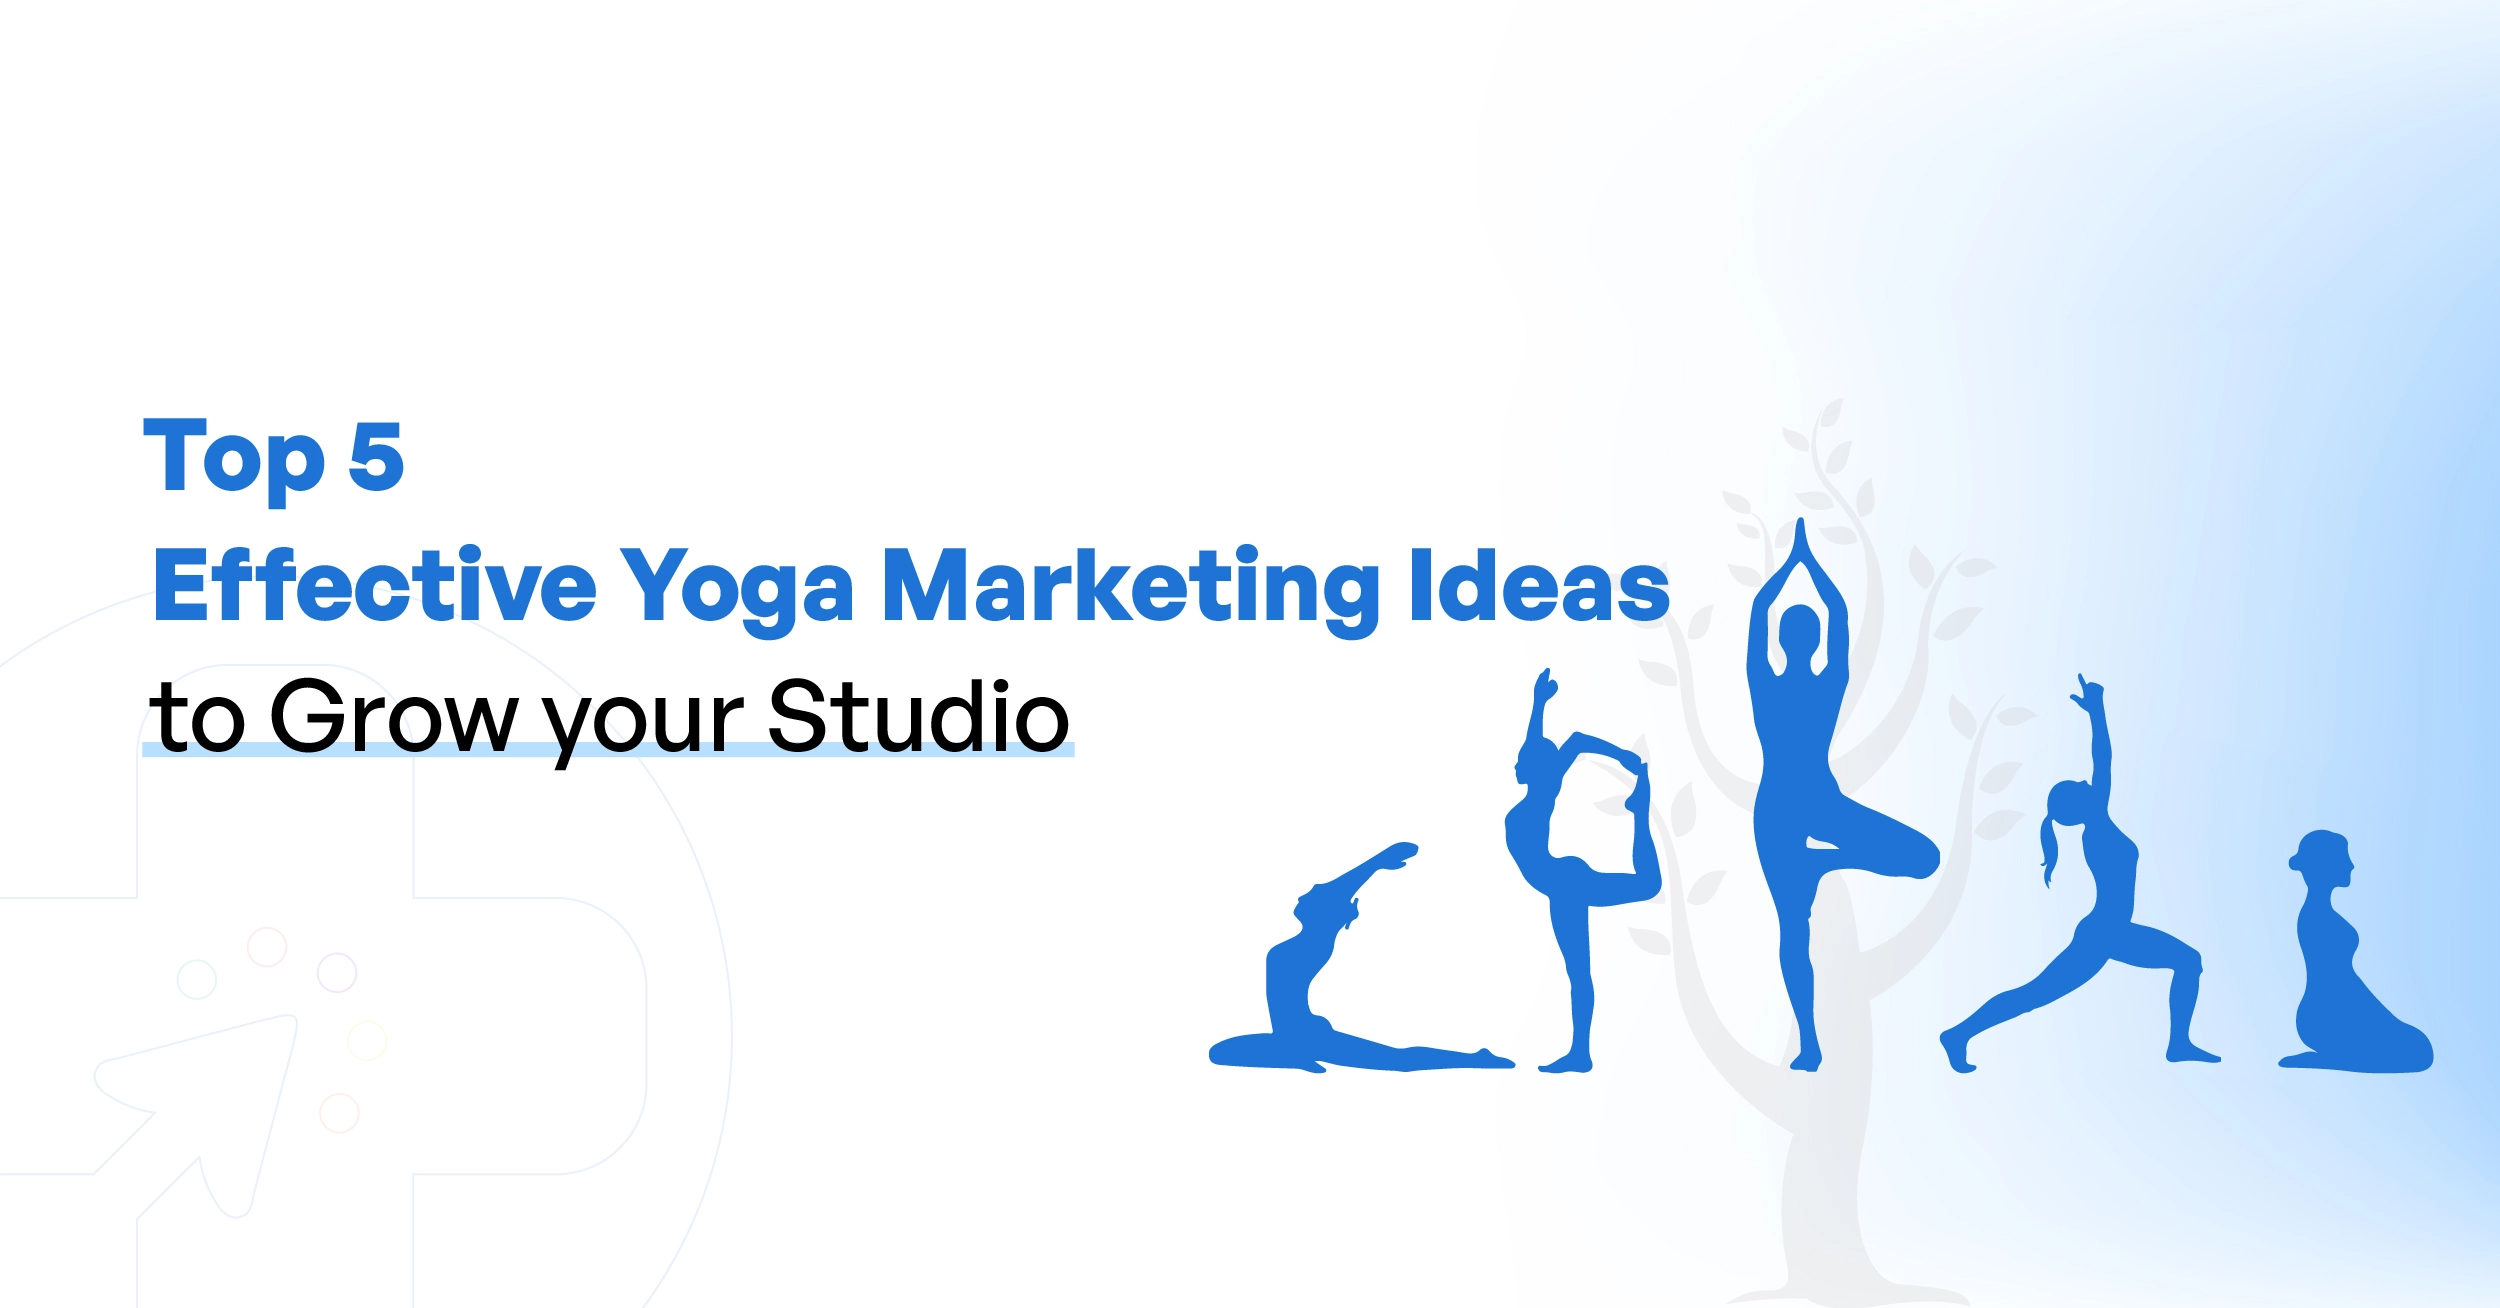 Top 5 Effective Yoga Marketing Ideas to Grow Your Studio